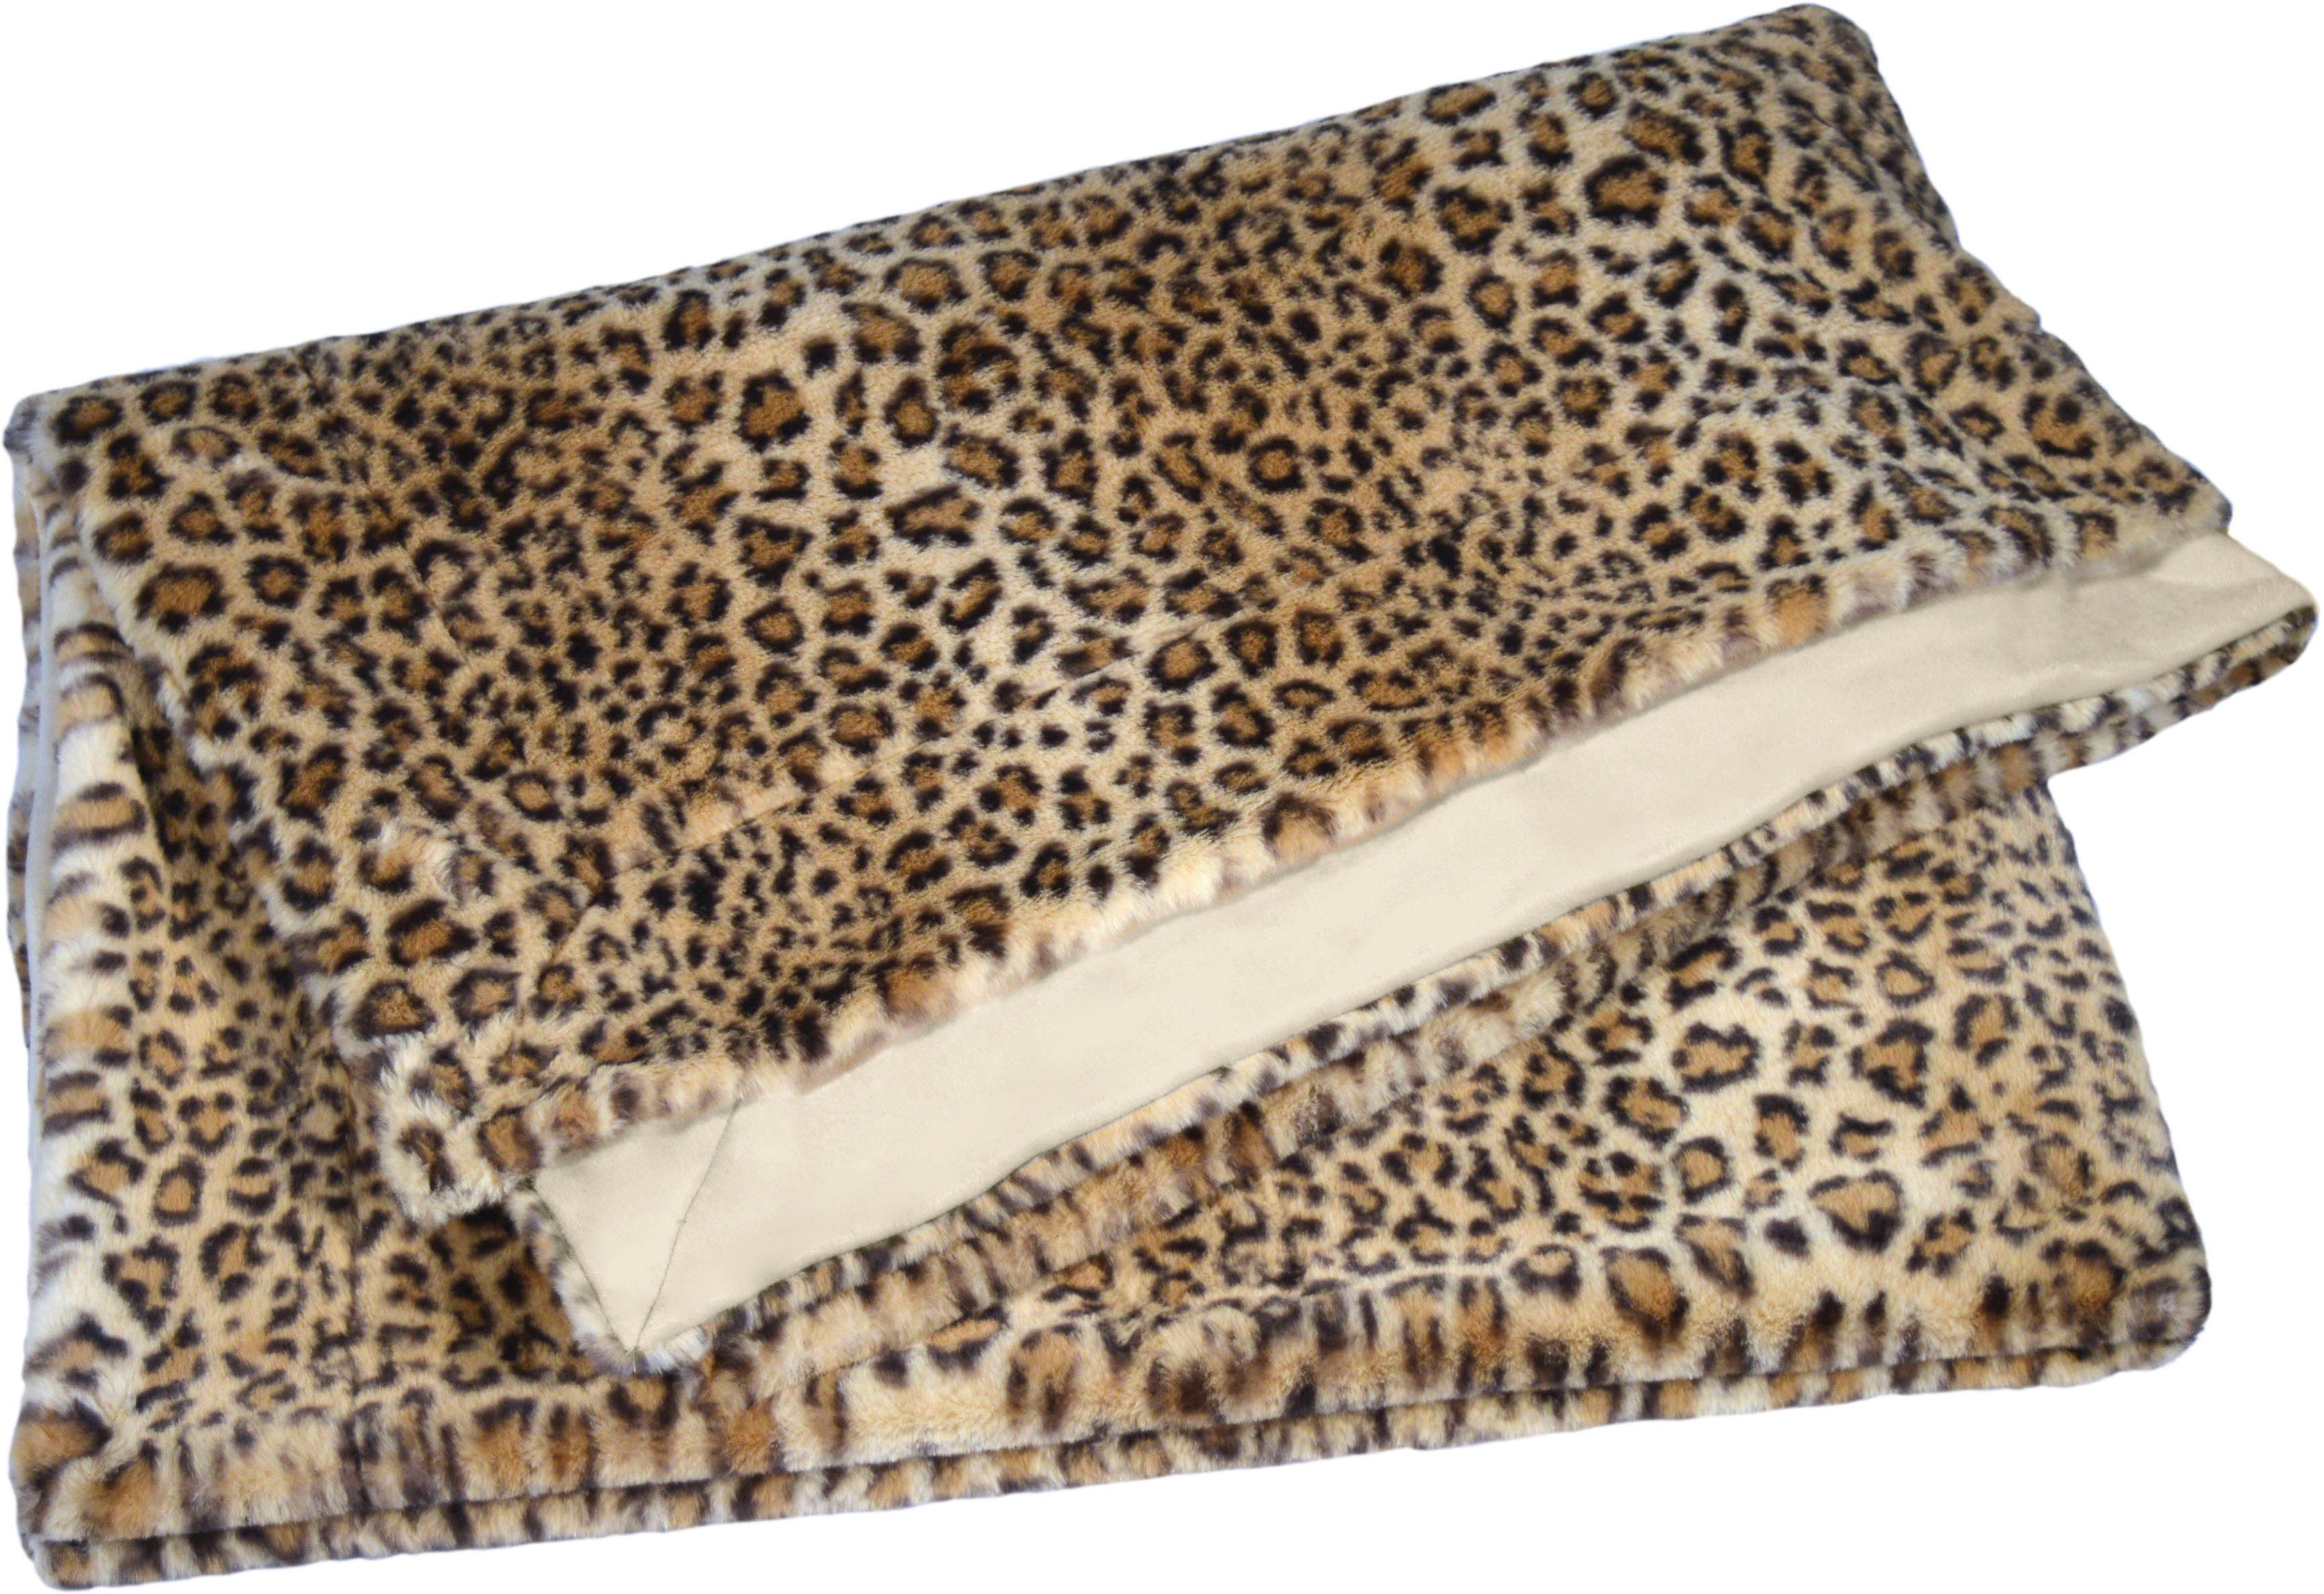 Wohndecke Leopard, MESANA, Fellimitat aus hochwertigem